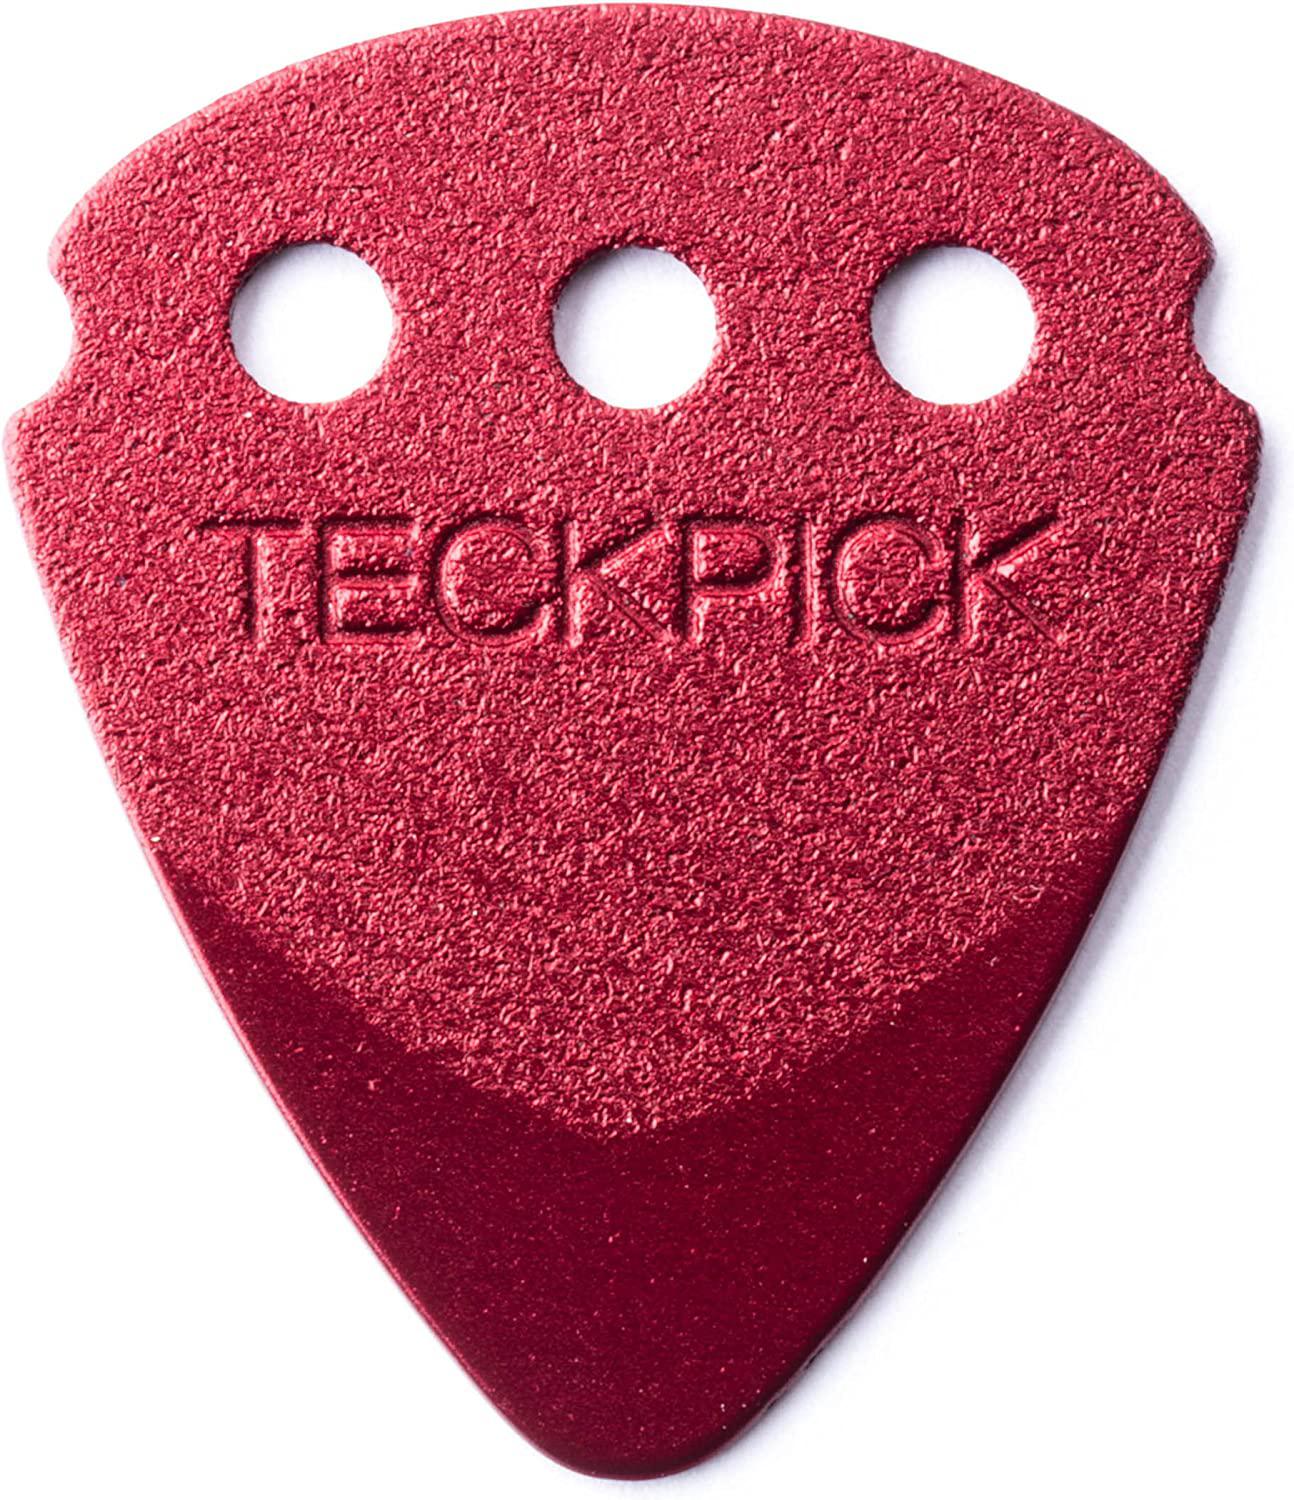 Dunlop - 12 Plumillas Teckpick, Color: Roja Mod.467R RED_12